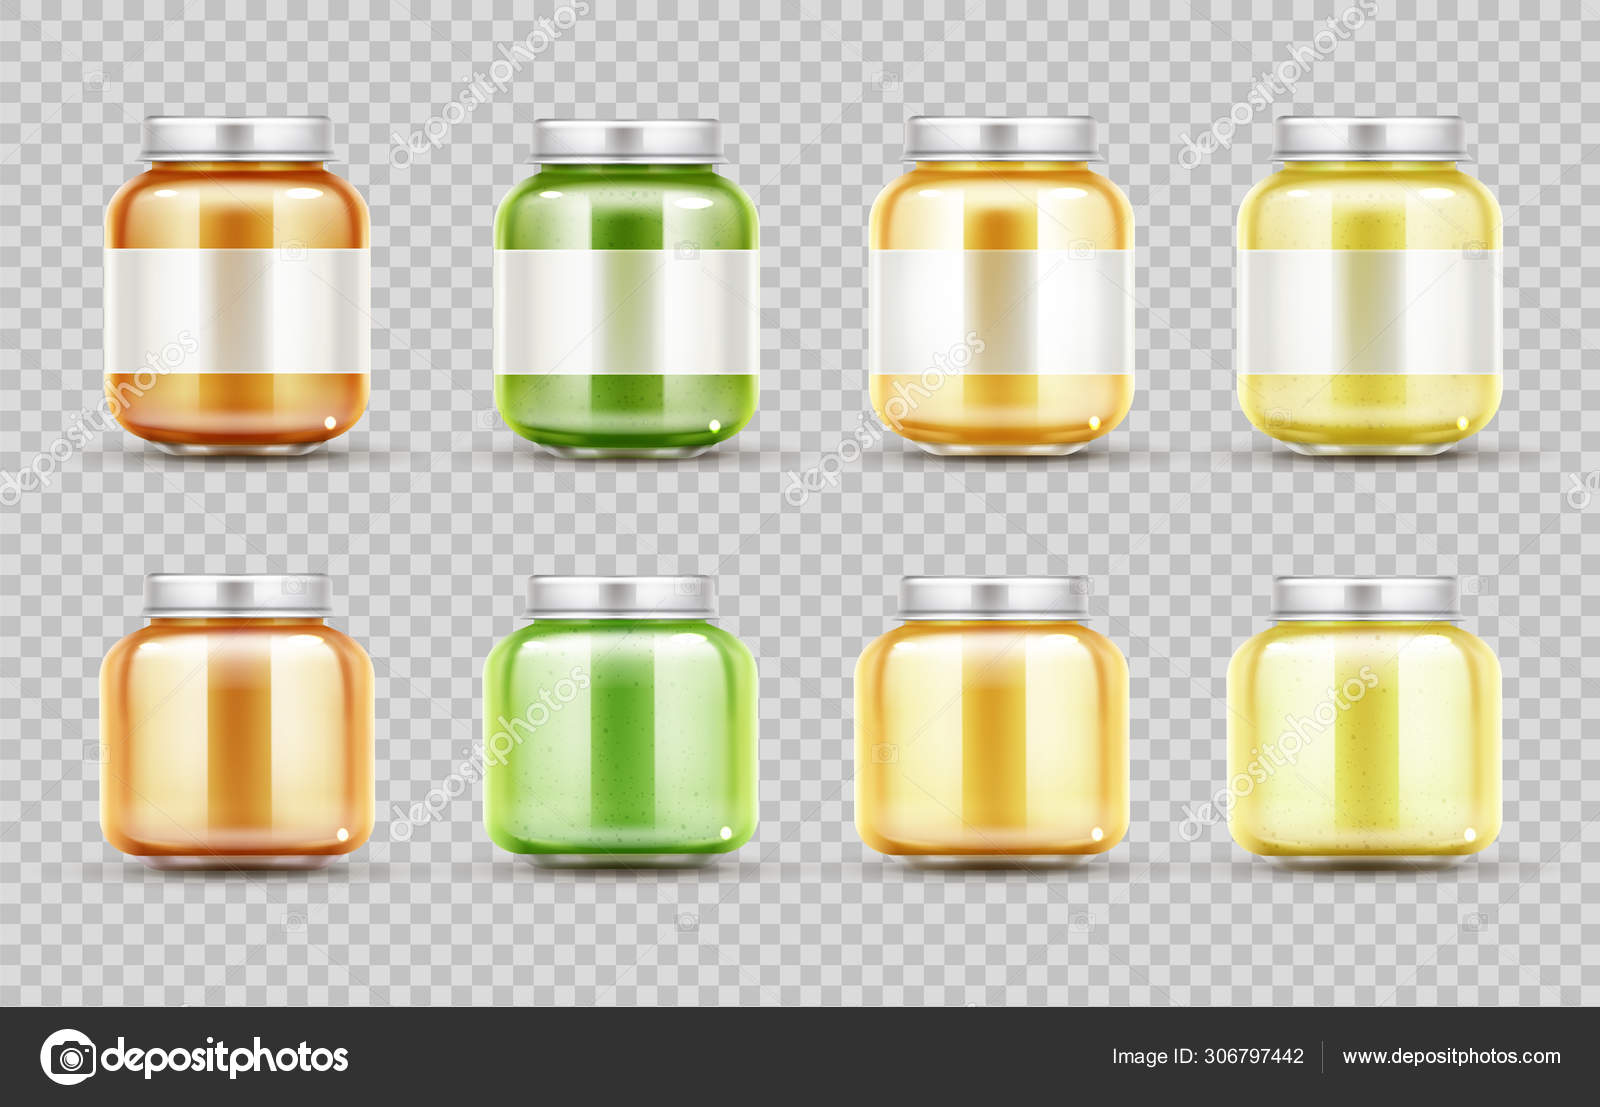 https://st4.depositphotos.com/16229314/30679/v/1600/depositphotos_306797442-stock-illustration-baby-food-jars-set-glass.jpg